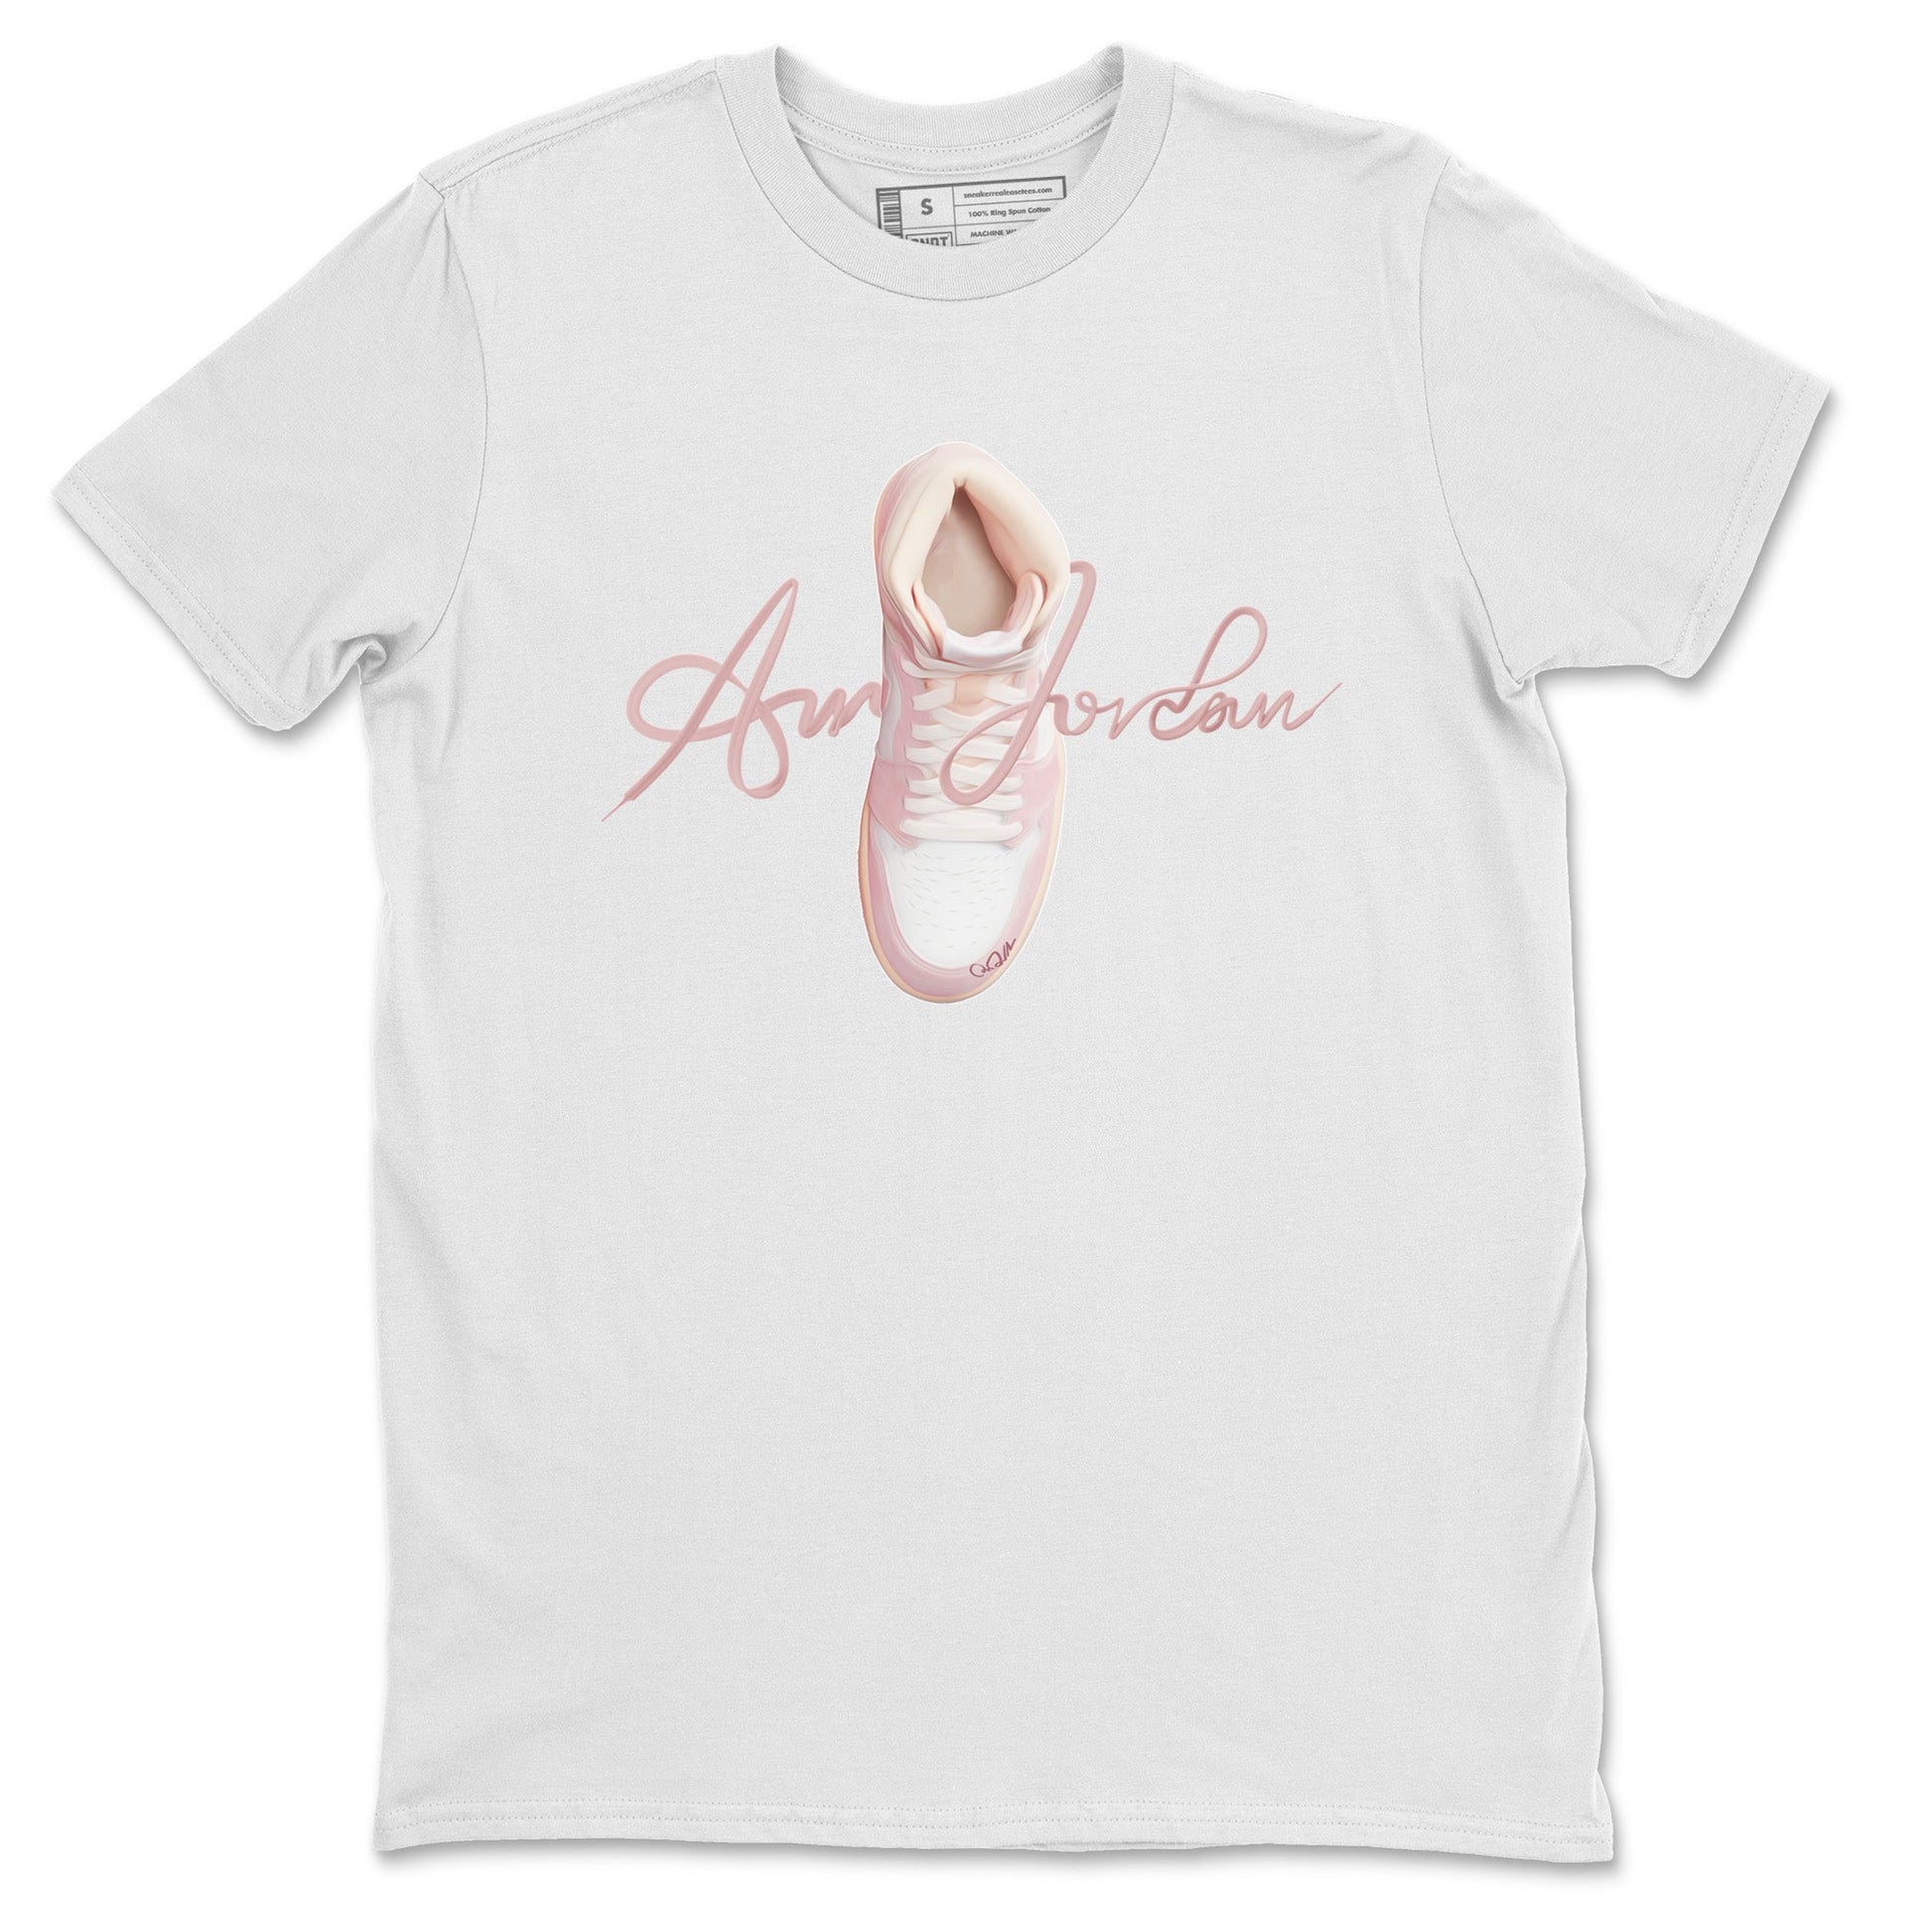 AJ1 Retro High OG Washed Pink Sneaker Tees Drip Gear Zone Caligraphy Shoe Lace Sneaker Tees AJ1 Retro High OG Washed Pink Shirt Unisex Shirts White 2